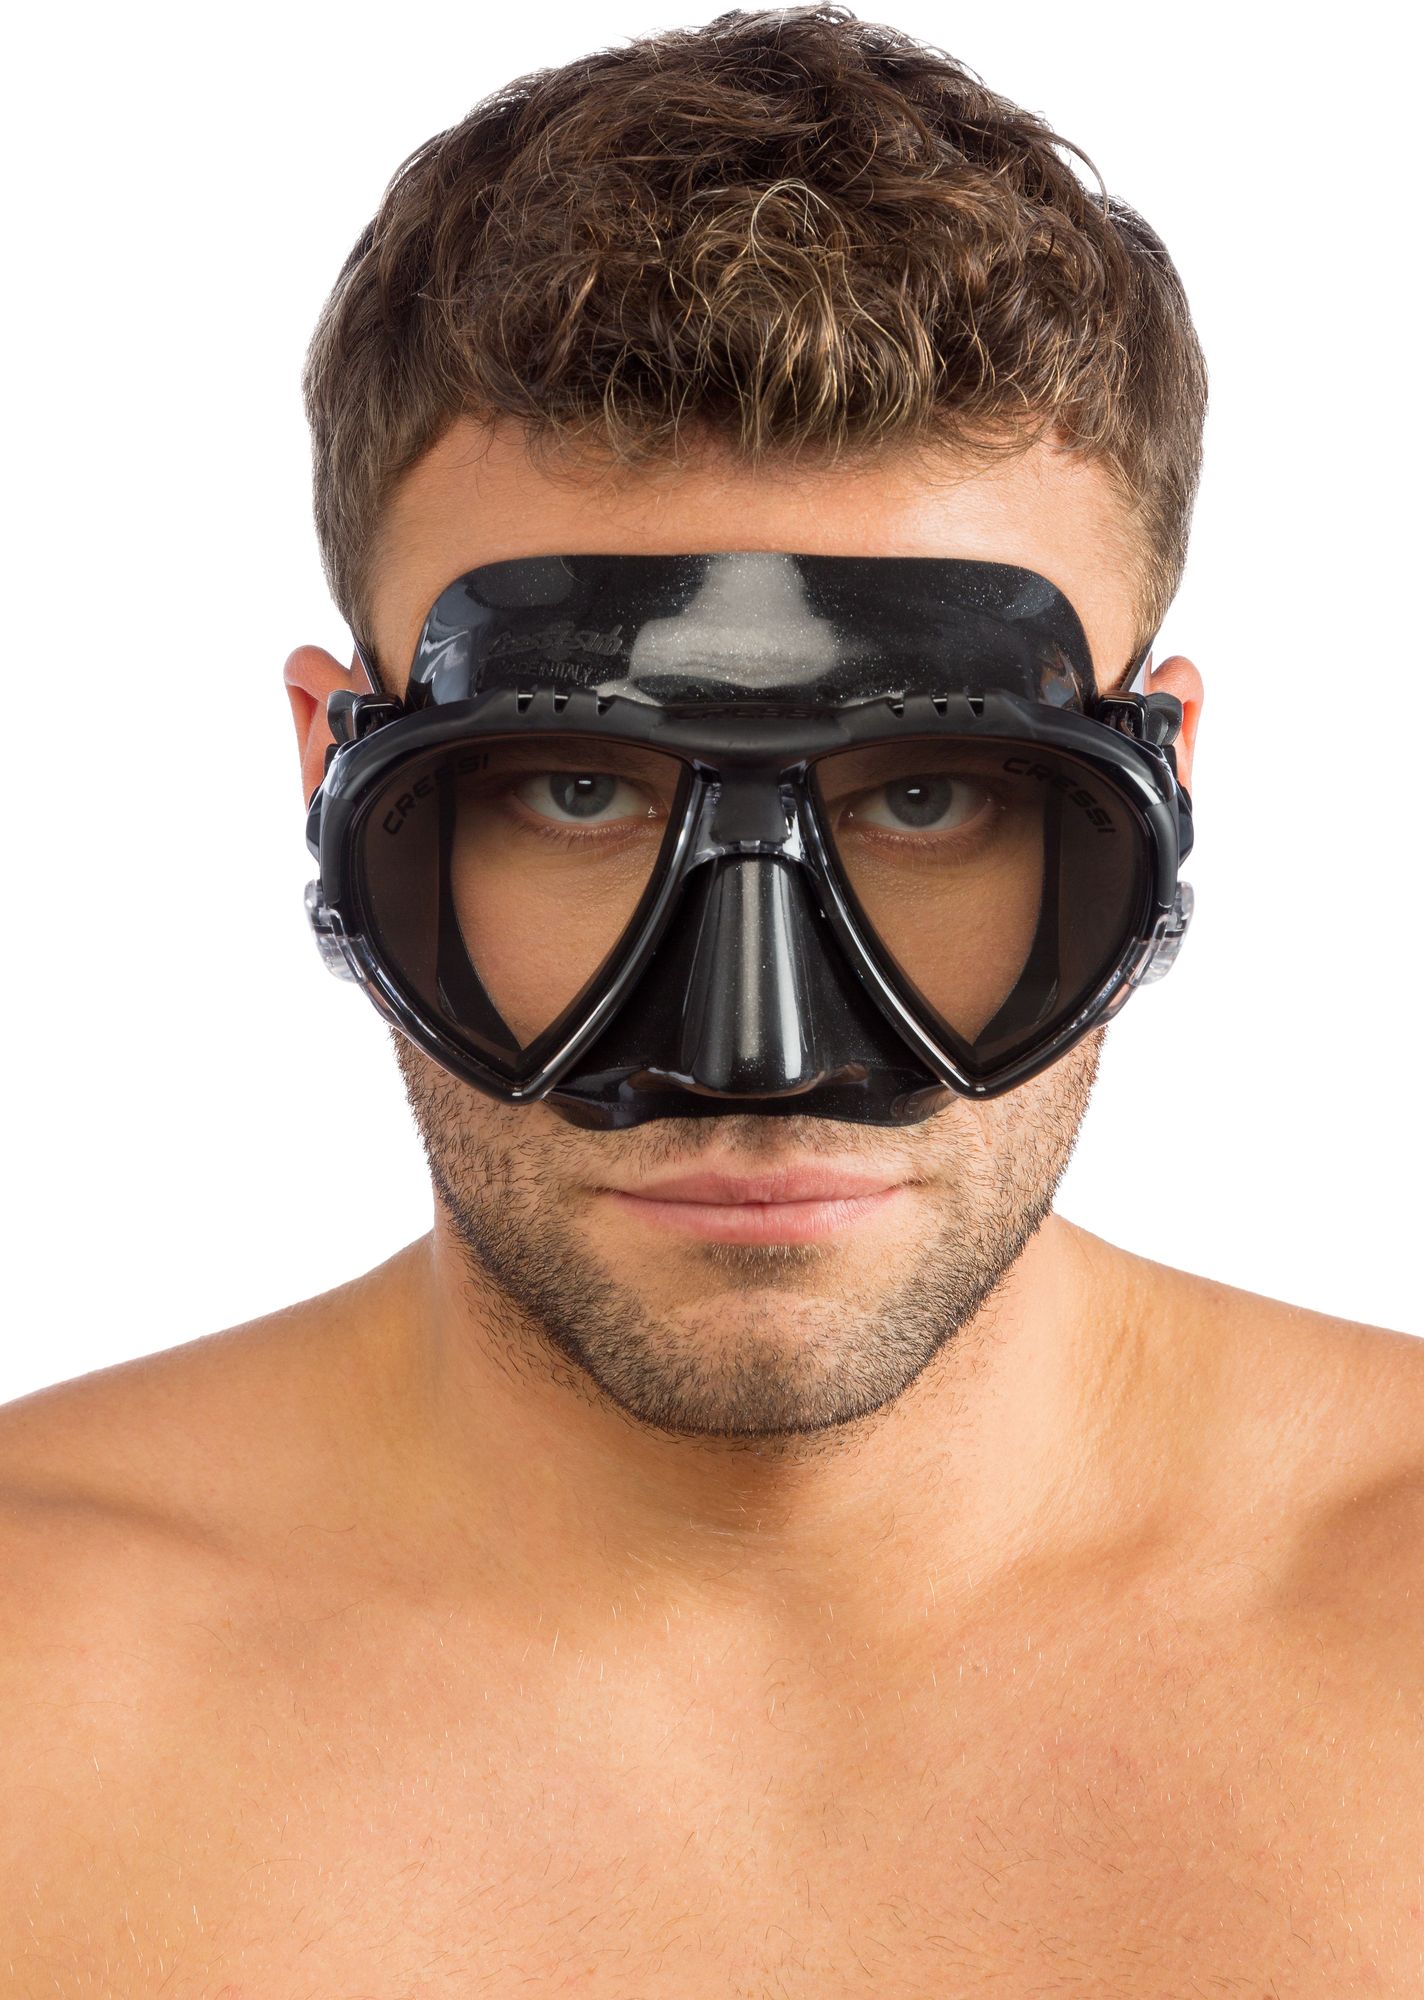 Matrix Mask  - Silicon Scuba mask, Snorkelling mask